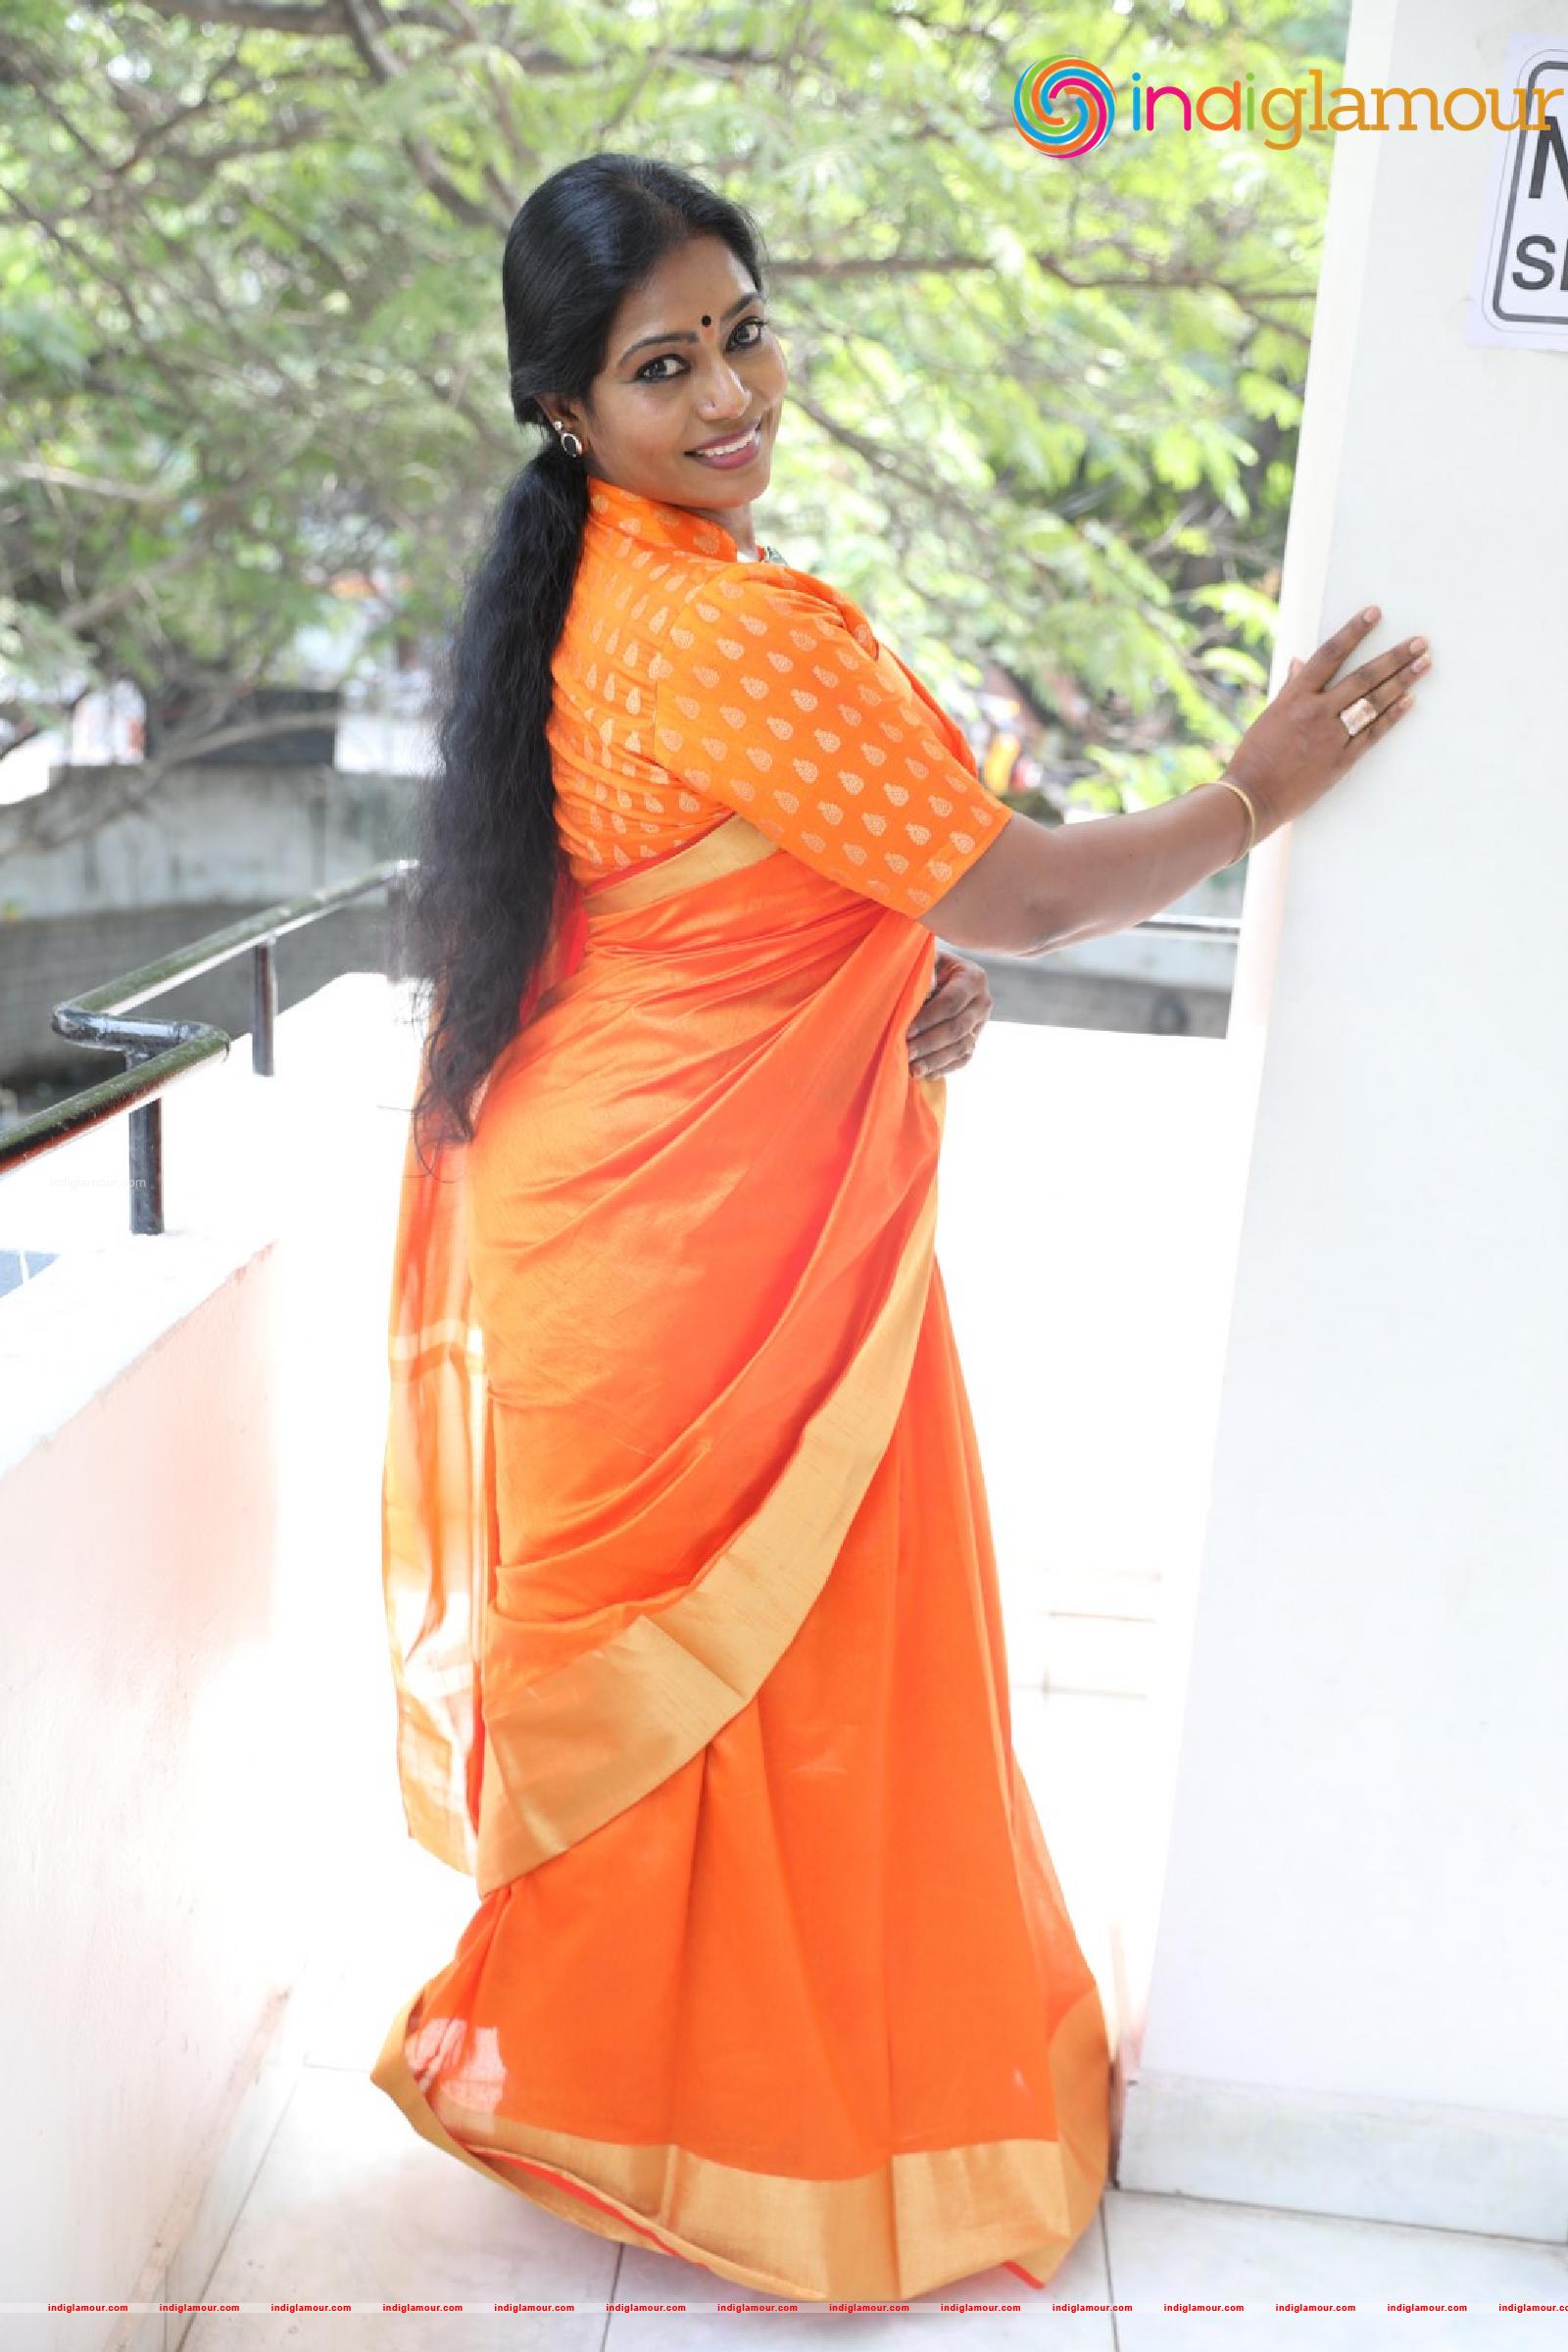 jayavani-actress-hd-photos-images-pics-and-stills-indiglamour-501388